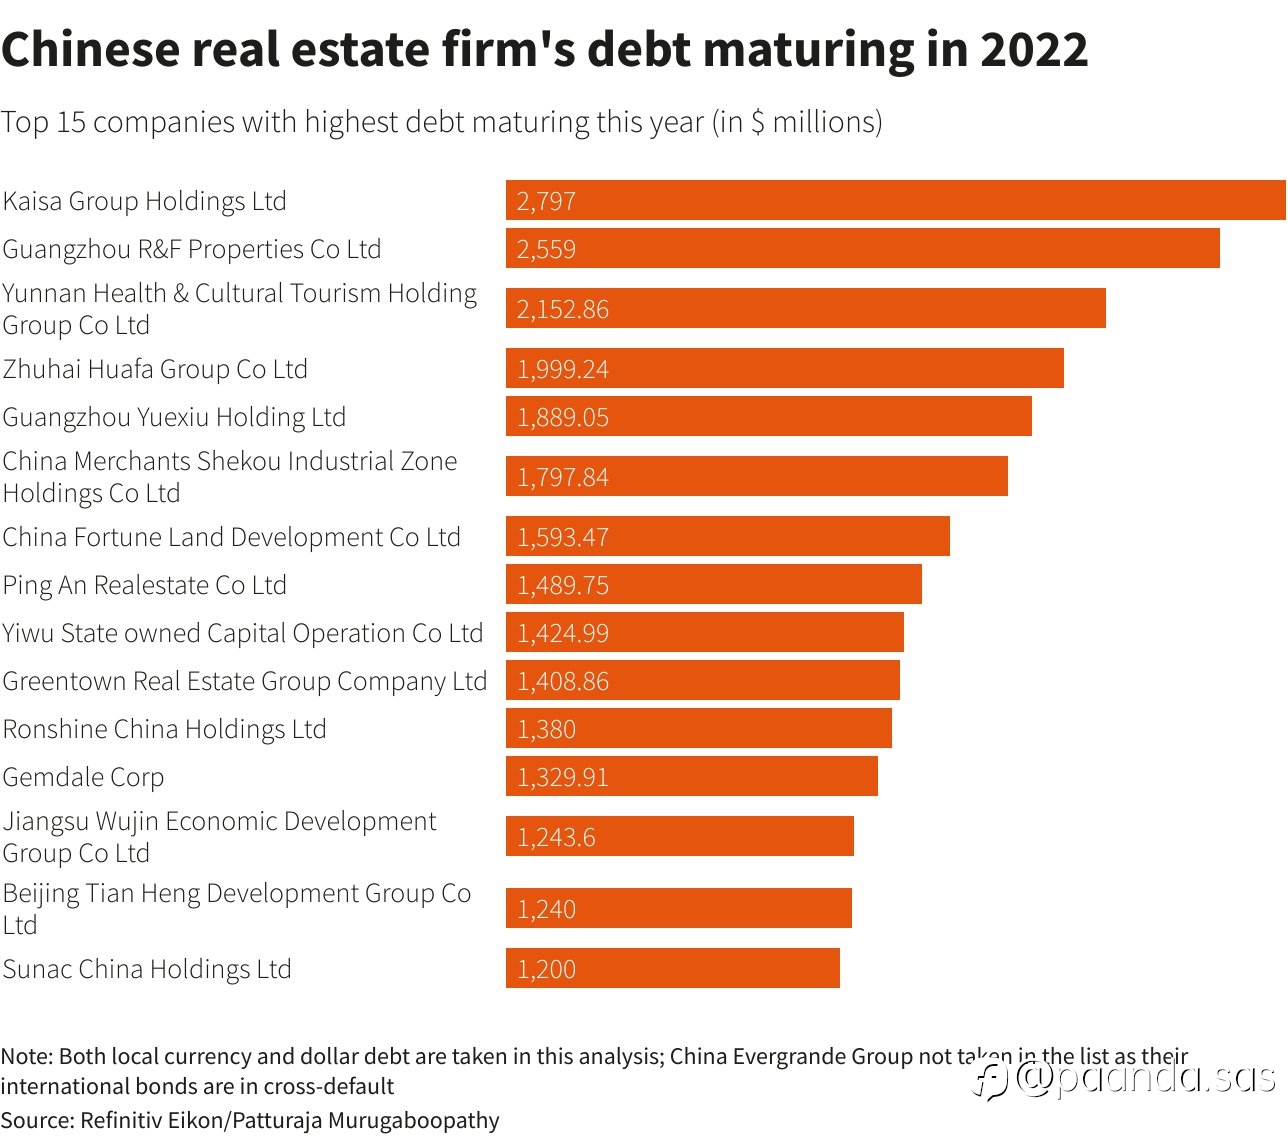 Chinese property developers face big debt maturities